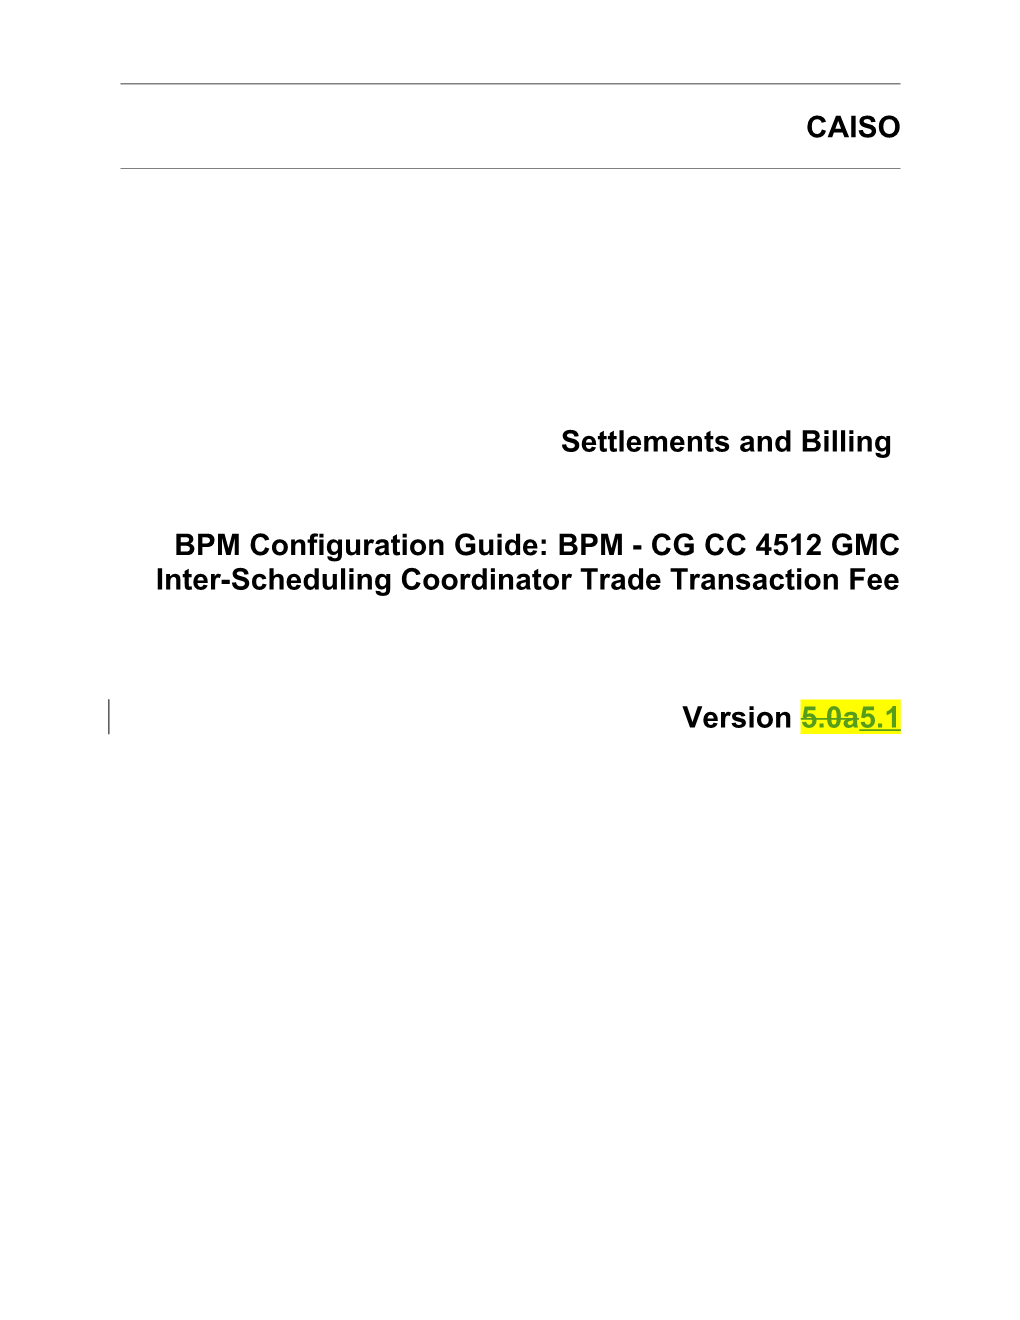 BPM - CG CC 4512 GMC Inter-Scheduling Coordinator Trade Transaction Fee